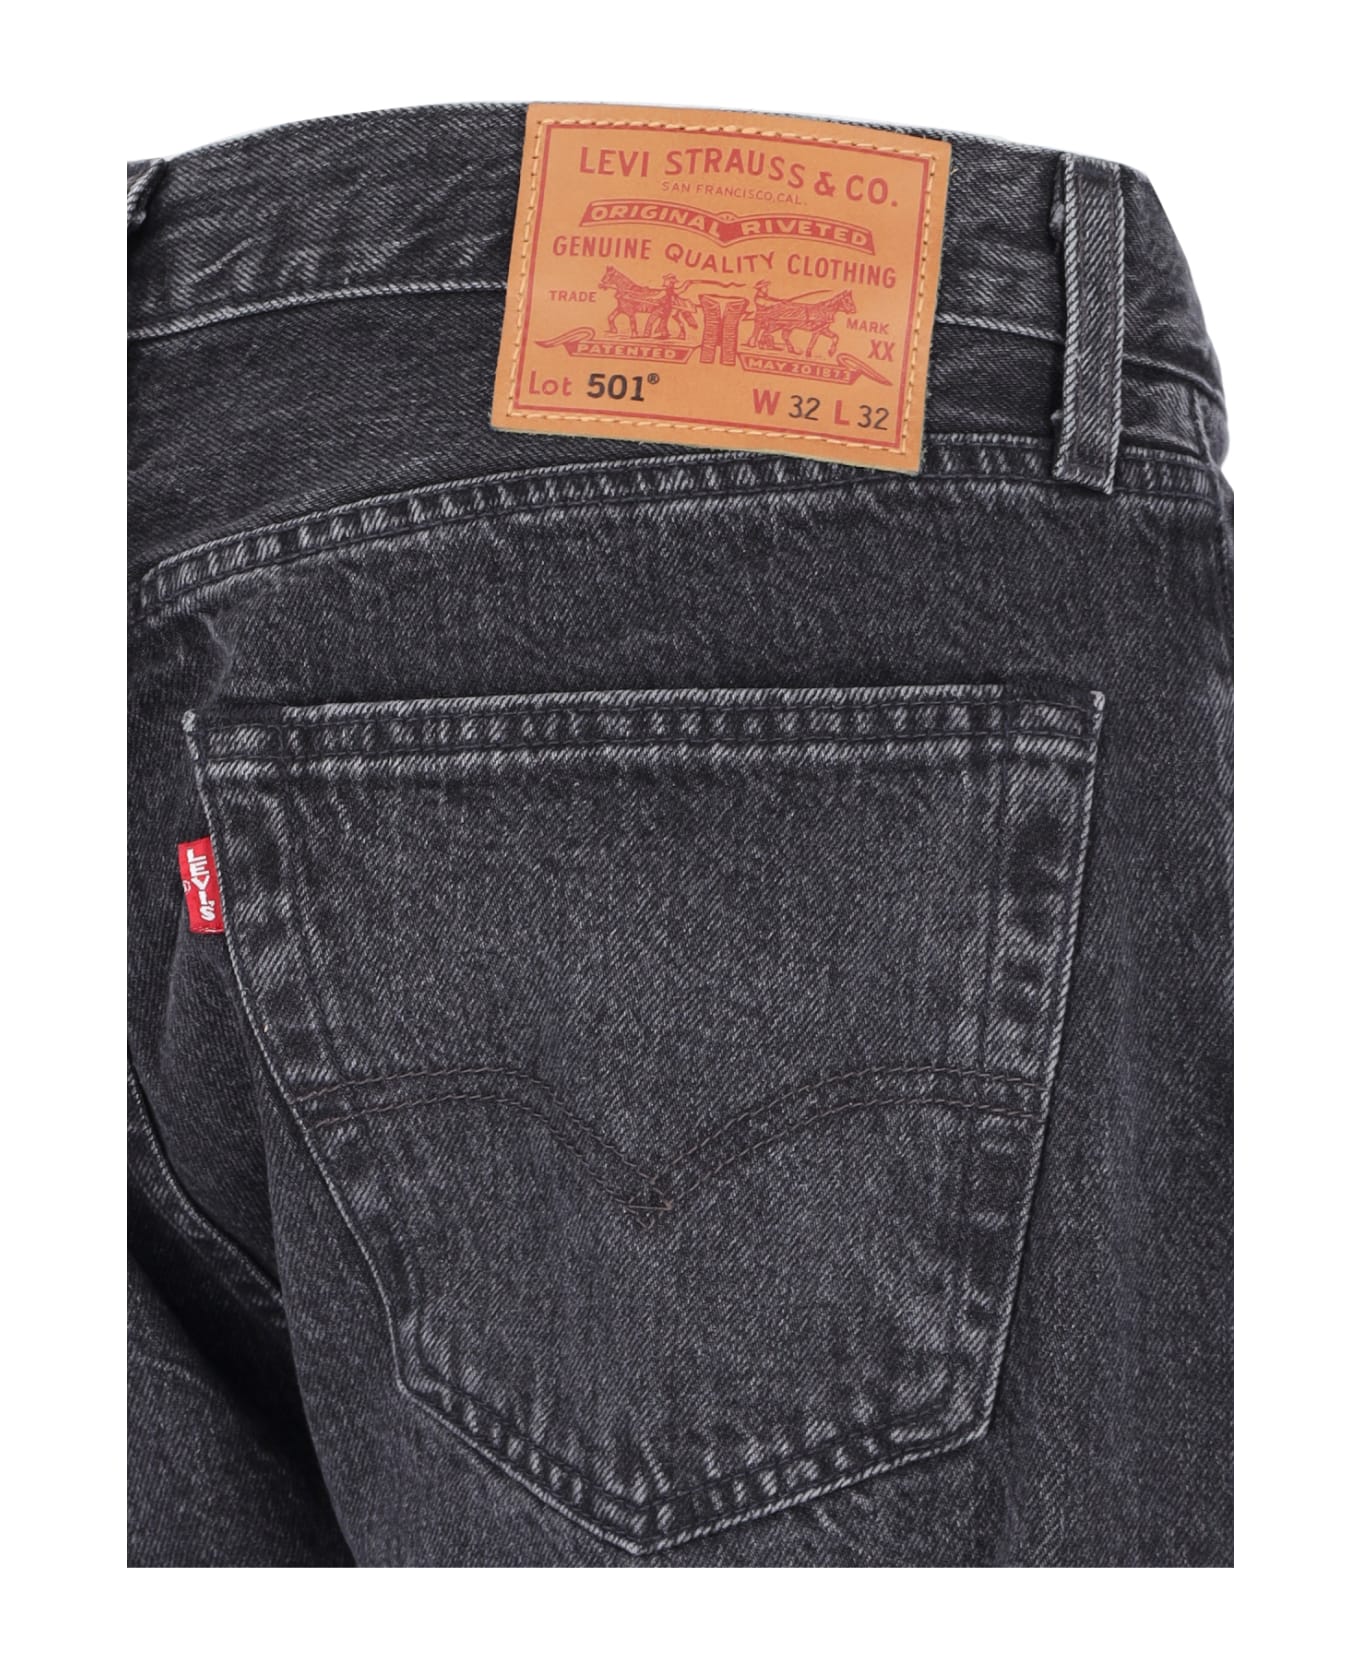 Levi's '501' Jeans - Black   デニム